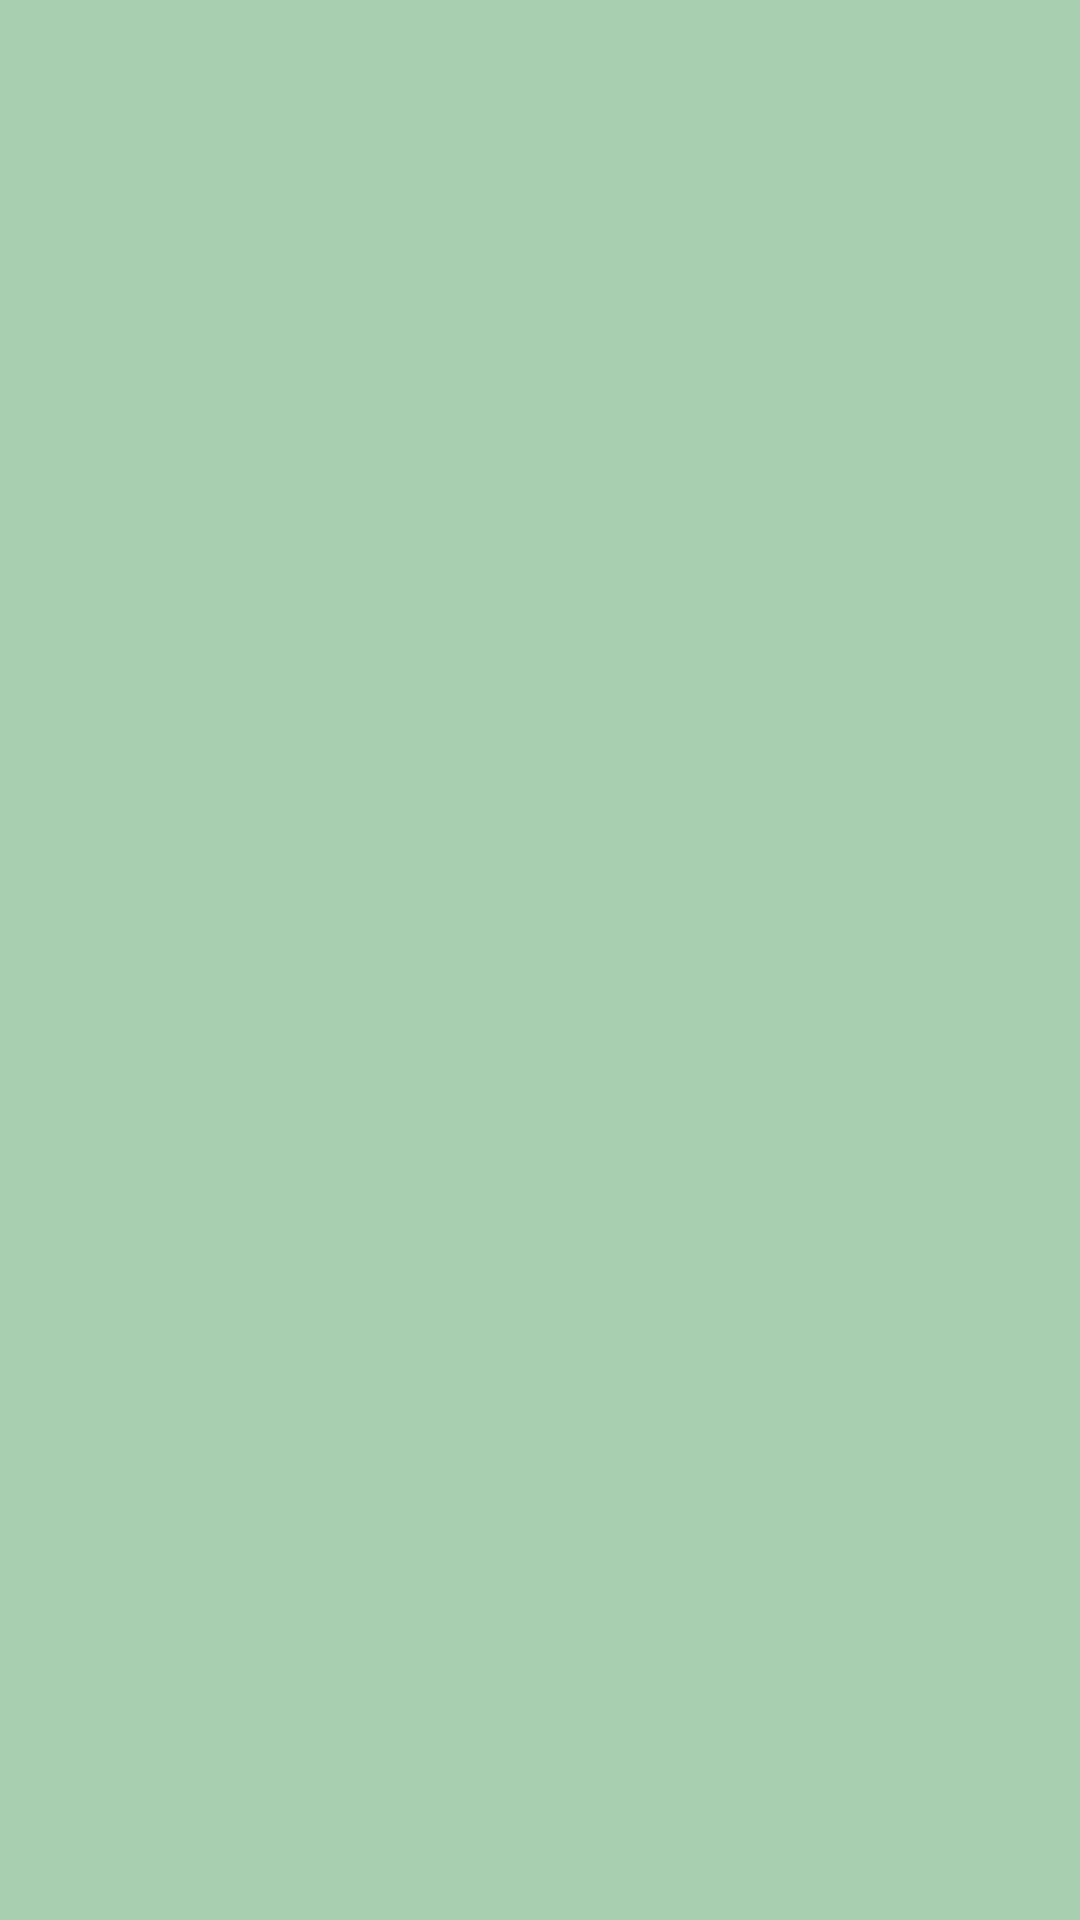 Plain Mint Green Phone Background